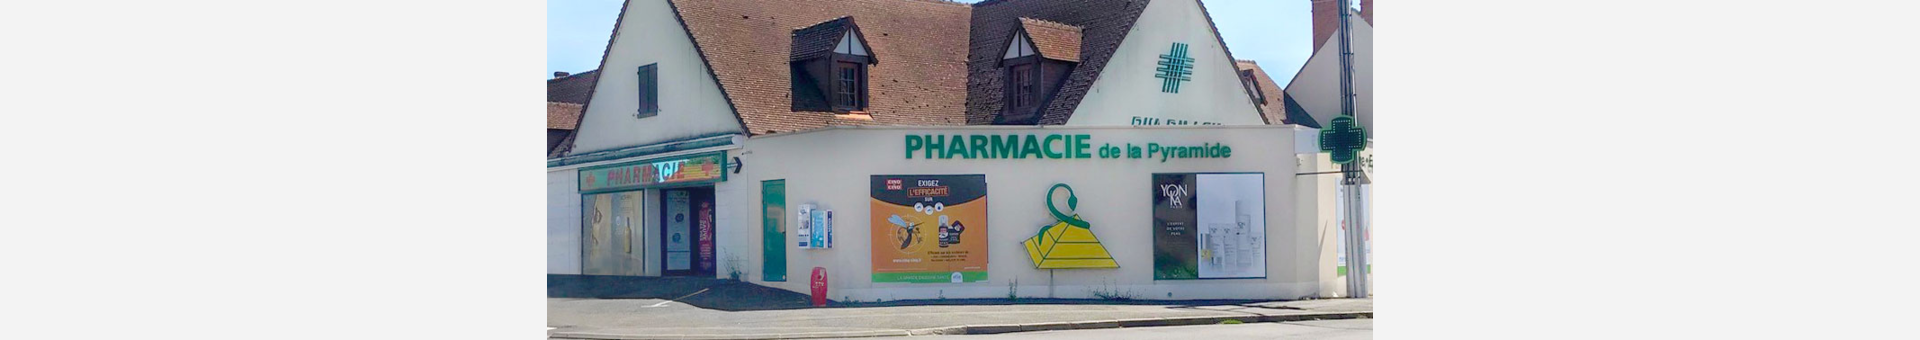 Pharmacie en ligne Pharmacie pyramide romorantin Loir et Cher 41 pas cher prix bas